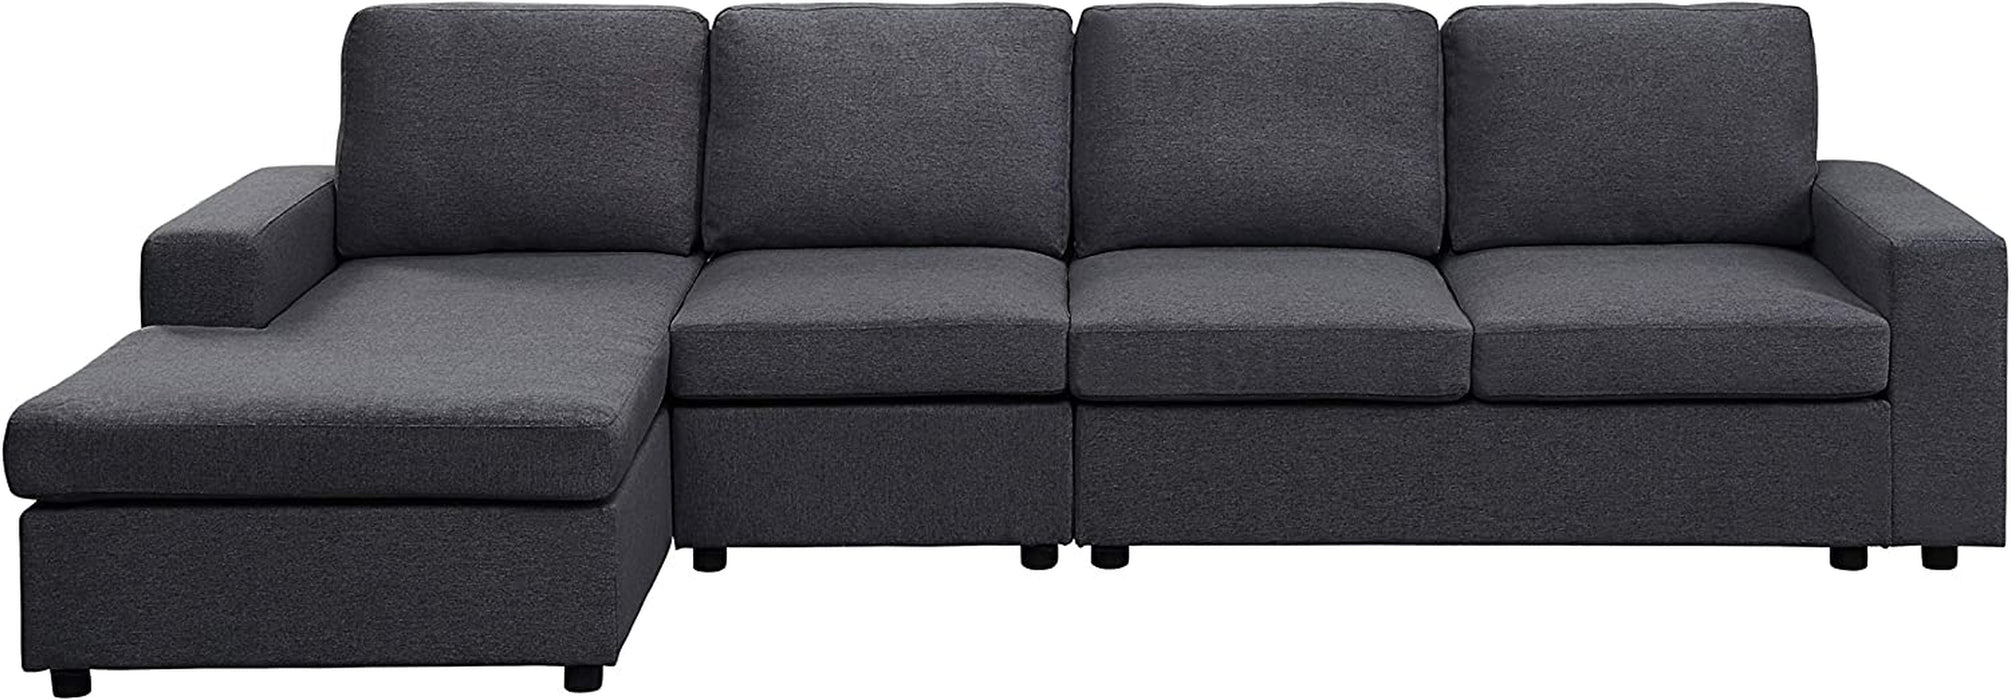 Reversible Chaise Dunlin Sofa, Dark Gray